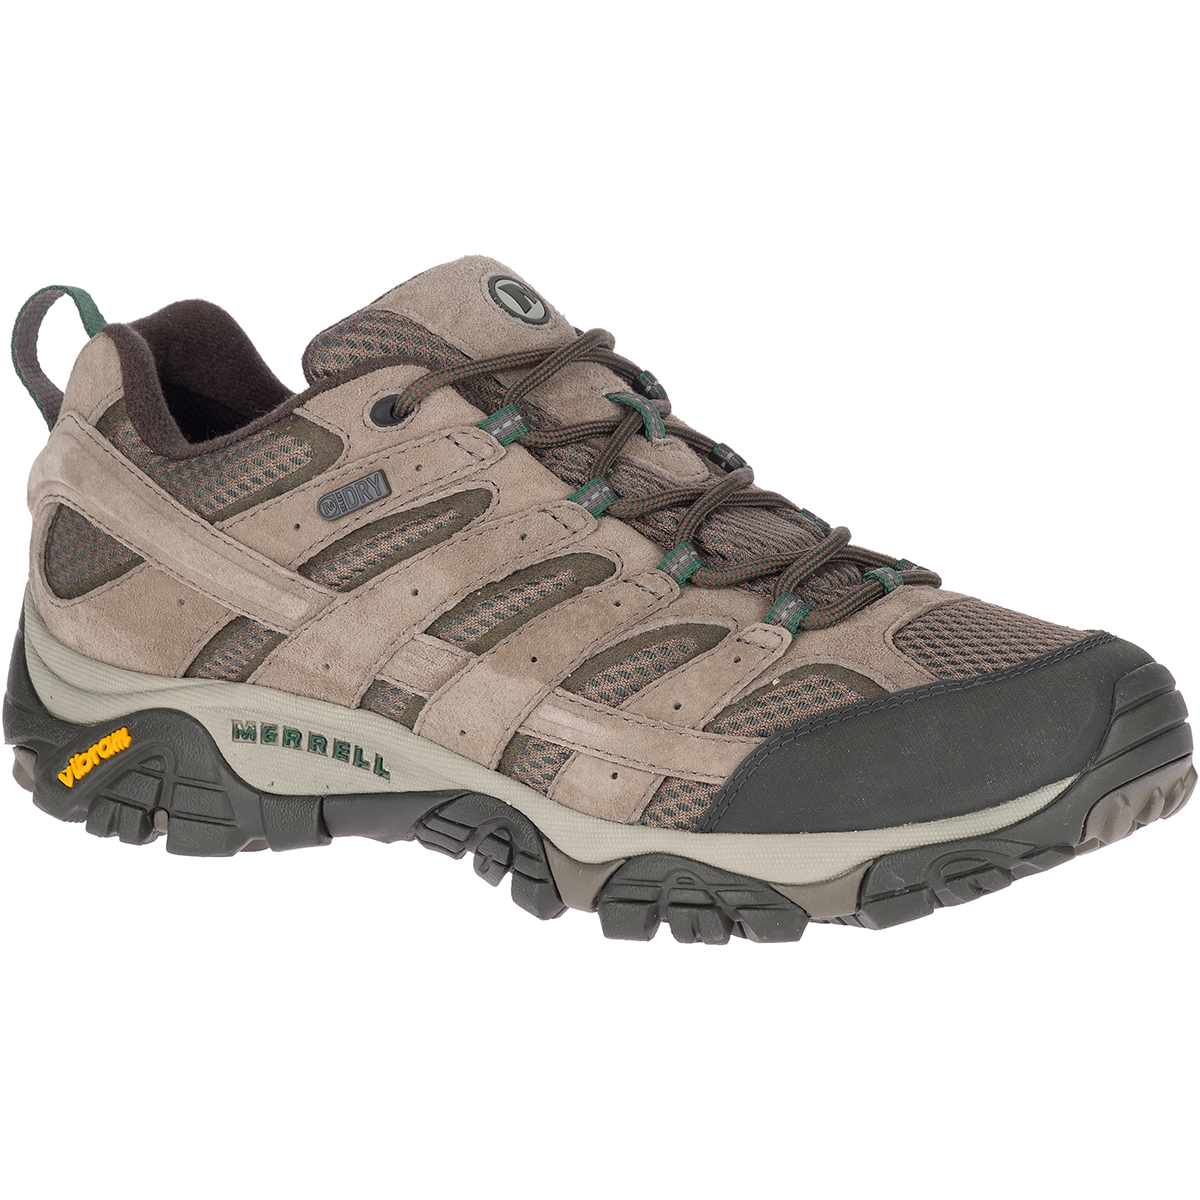 Merrell Men's Moab 2 Waterproof Hiking Shoes - Size 13